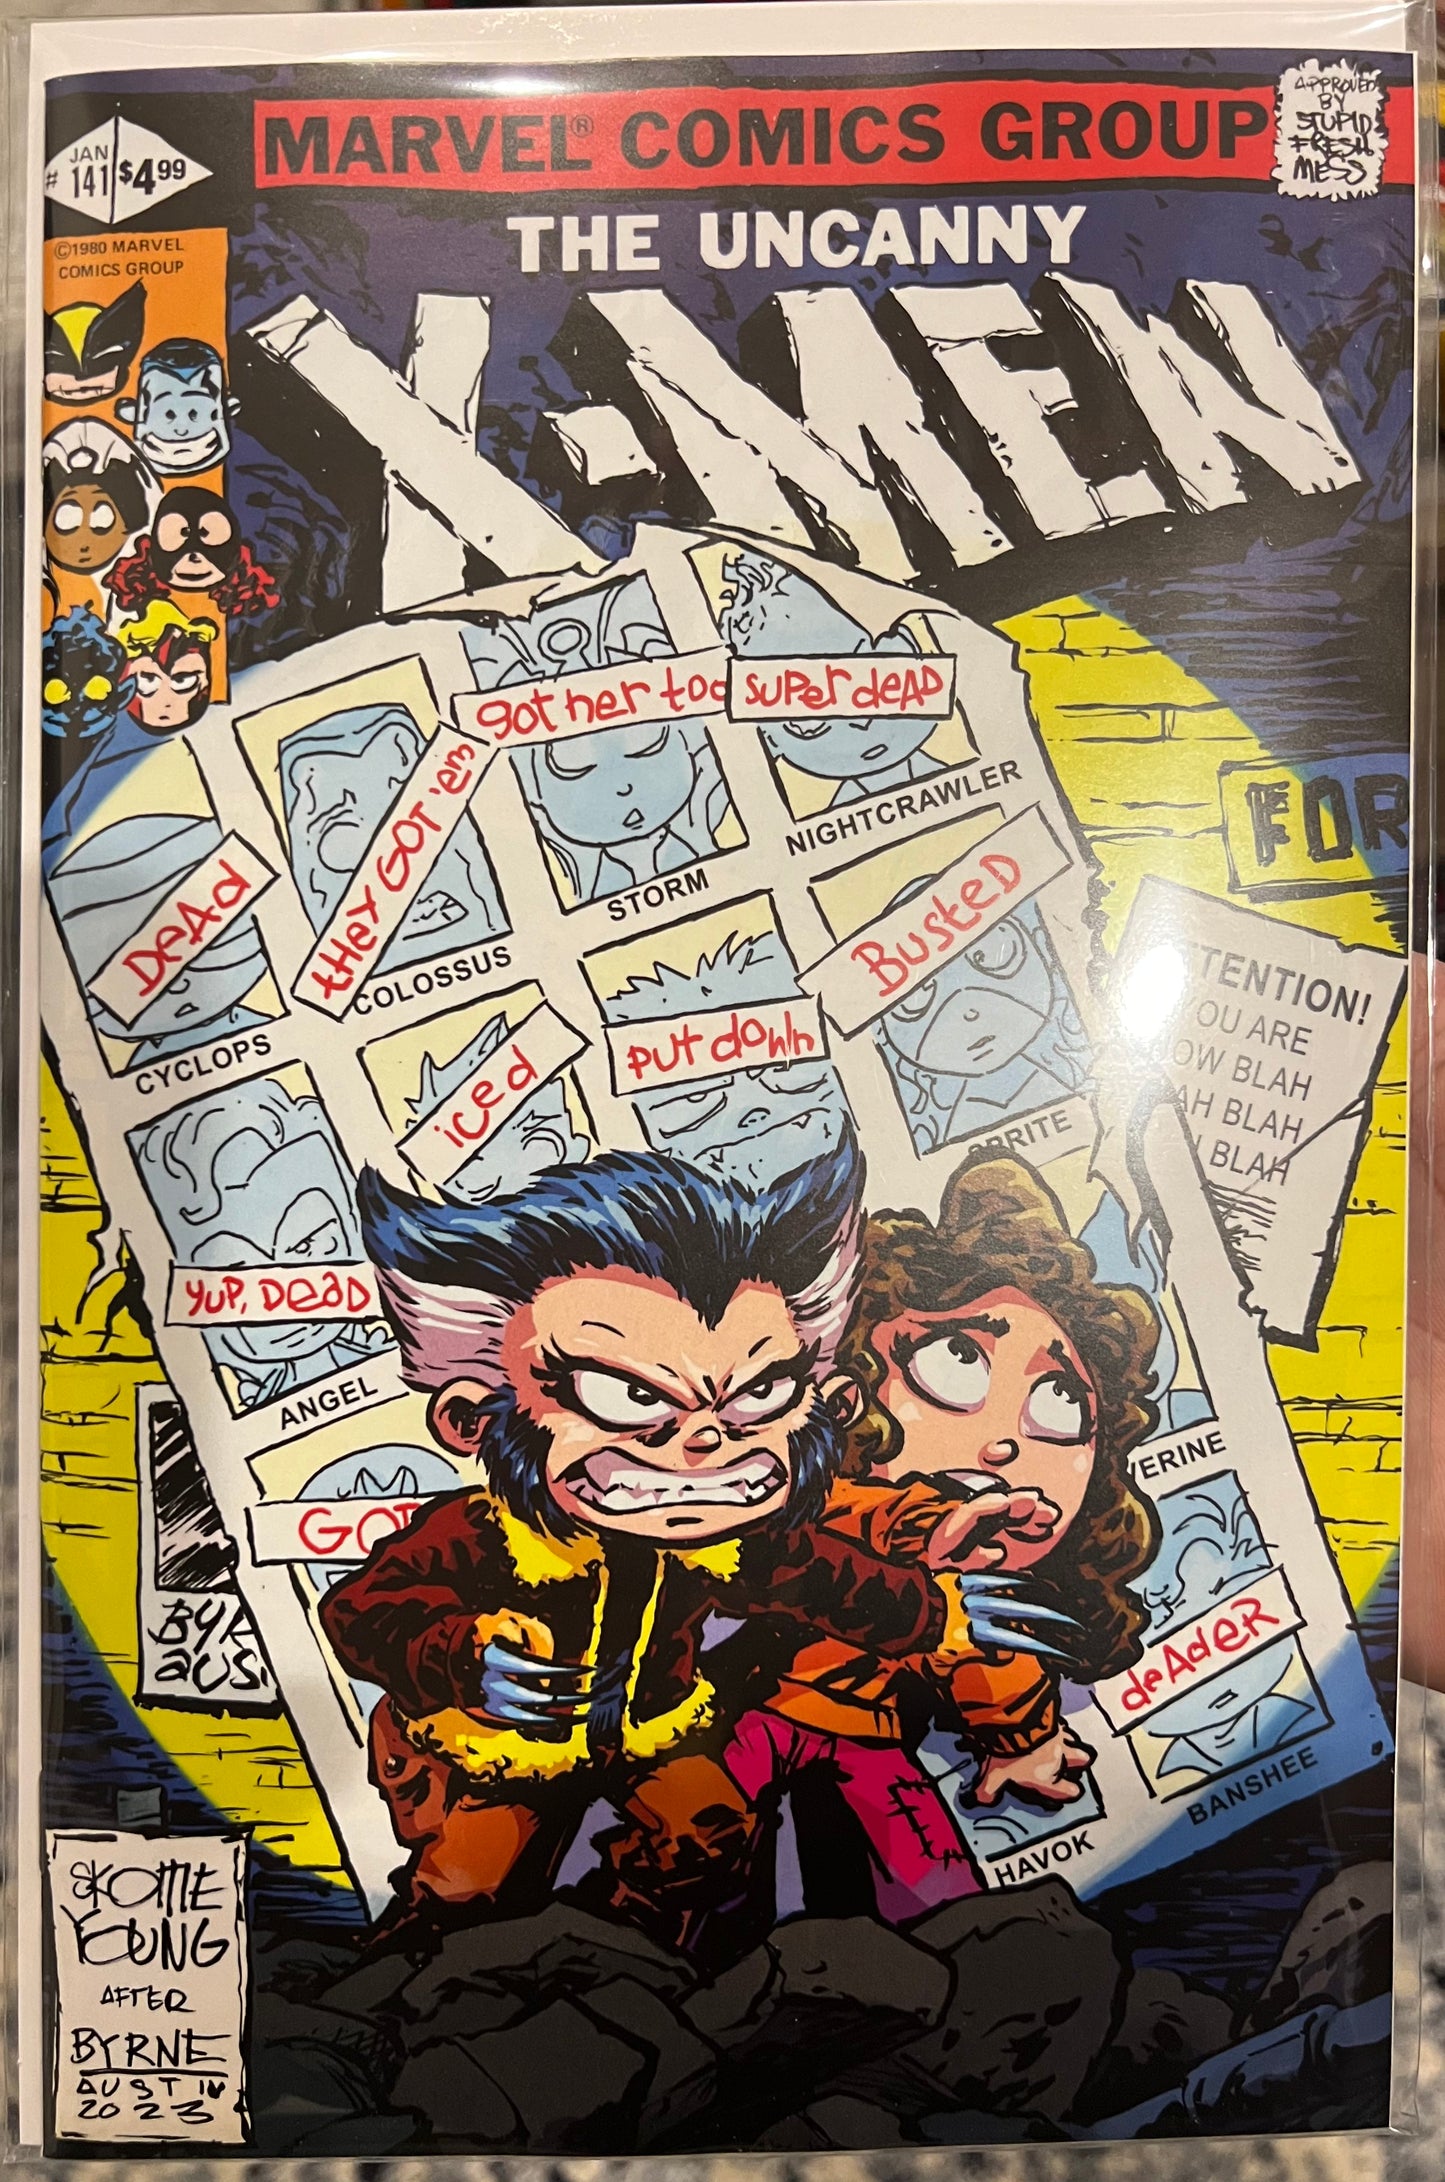 Uncanny X-Men #141 Facsimile Variant by Skottie Young (Marvel)